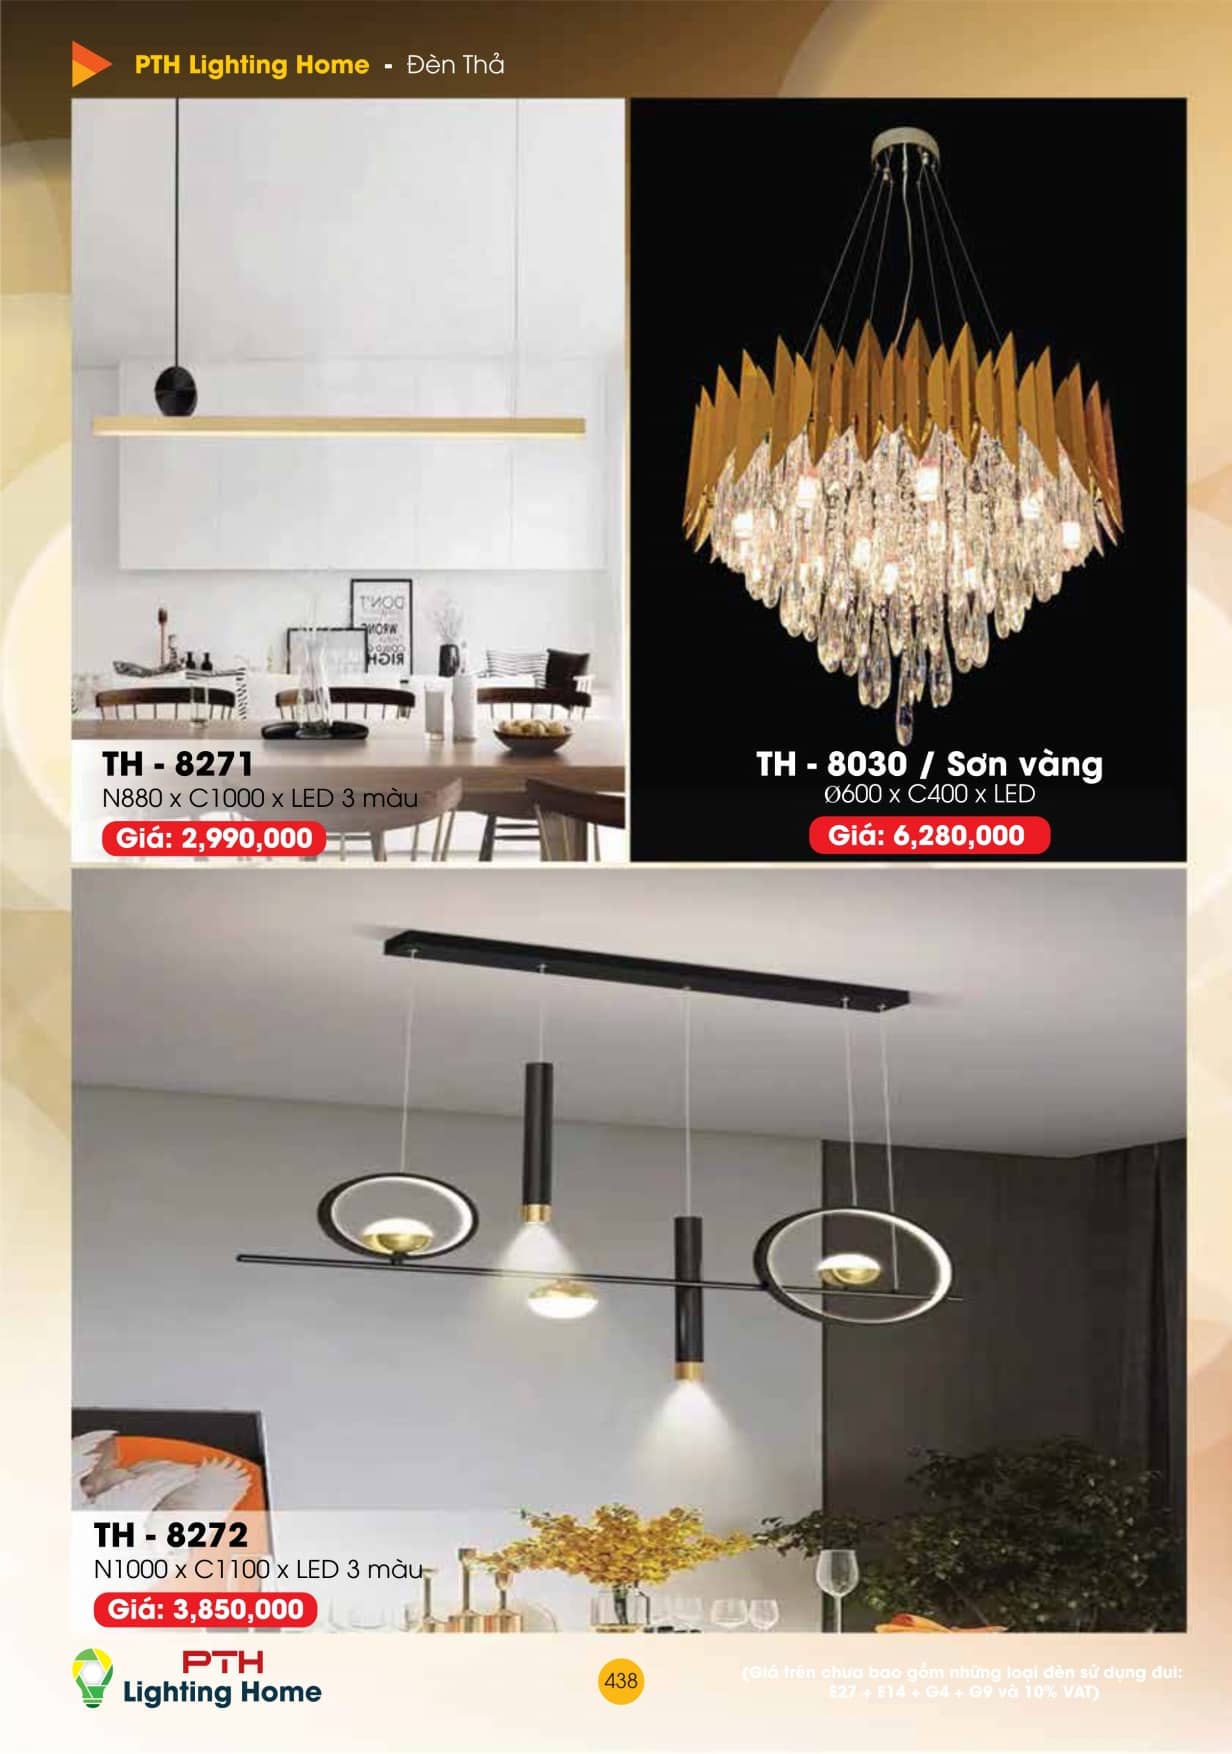 catalogue-bang-gia-den-led-trang-tri-pth-lighting-home-440